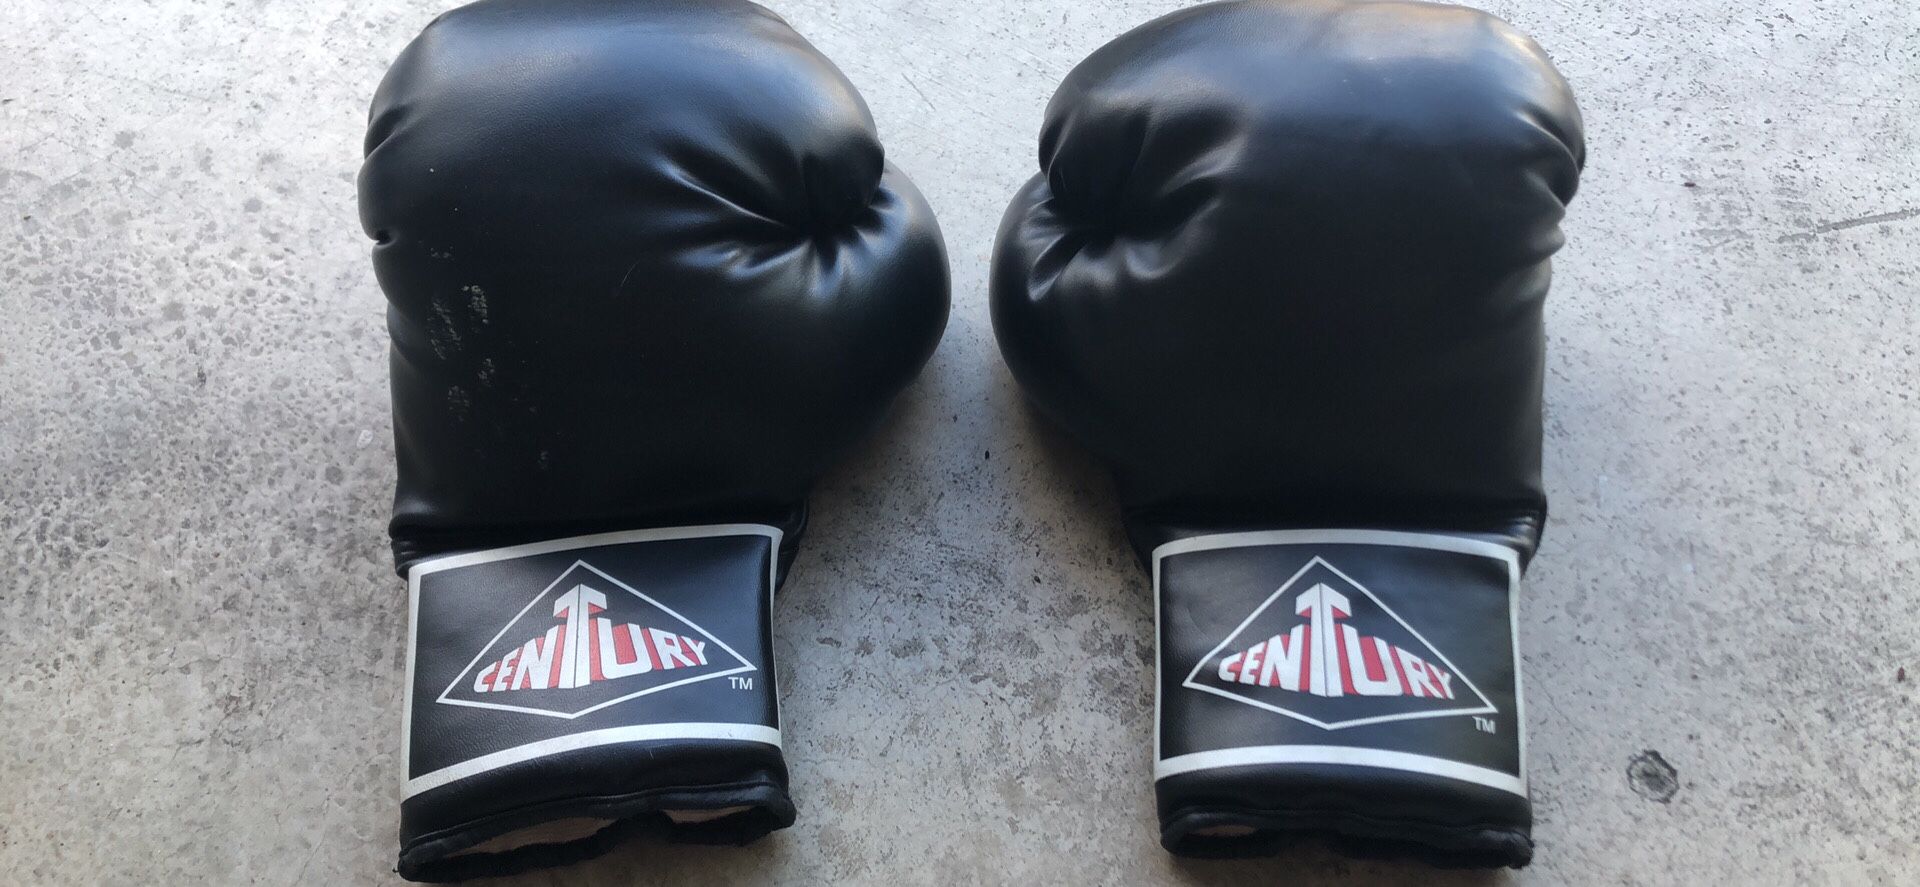 Century Boxing Gloves